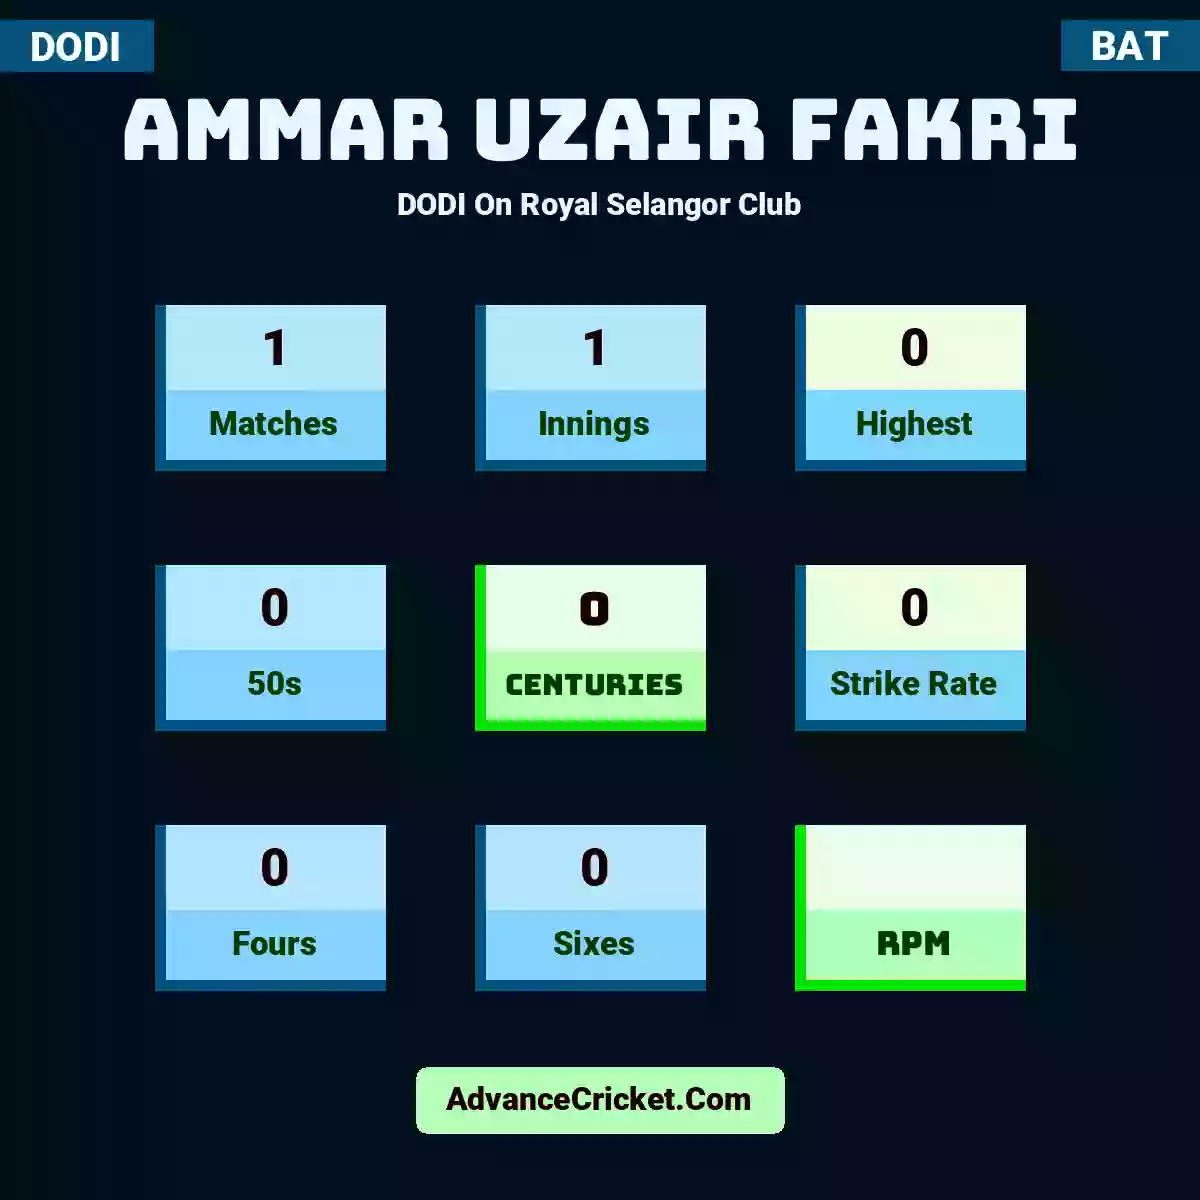 Ammar Uzair Fakri DODI  On Royal Selangor Club, Ammar Uzair Fakri played 1 matches, scored 0 runs as highest, 0 half-centuries, and 0 centuries, with a strike rate of 0. A.Uzair.Fakri hit 0 fours and 0 sixes.